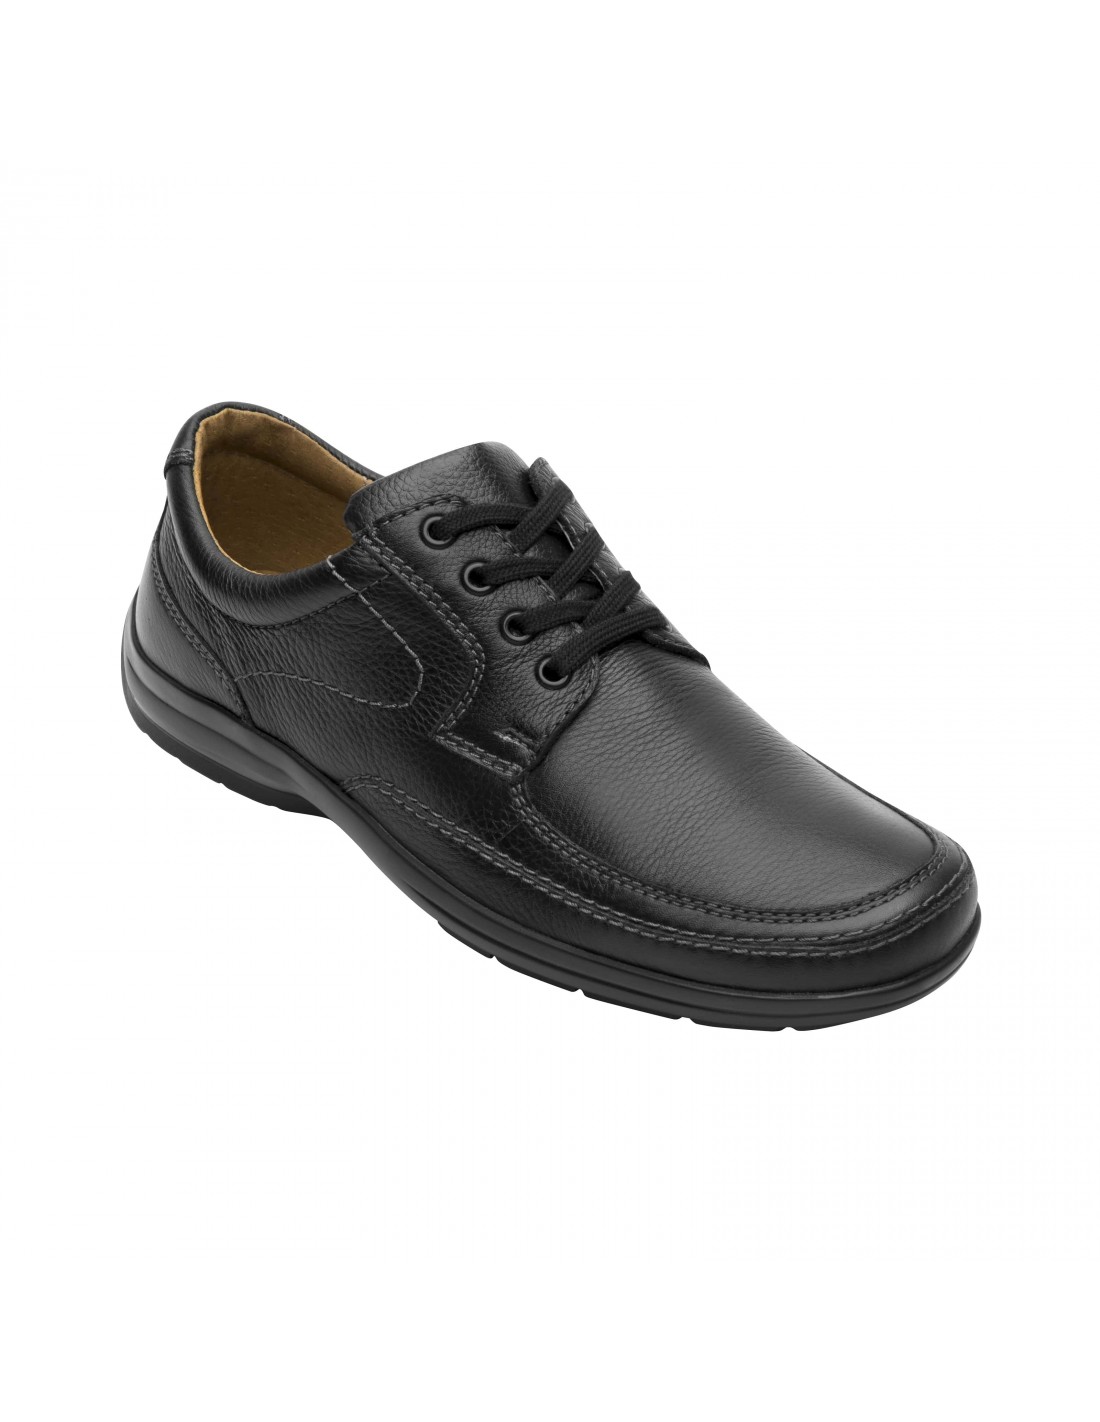 Zapato Caballero Flexi 71612 Negro Con